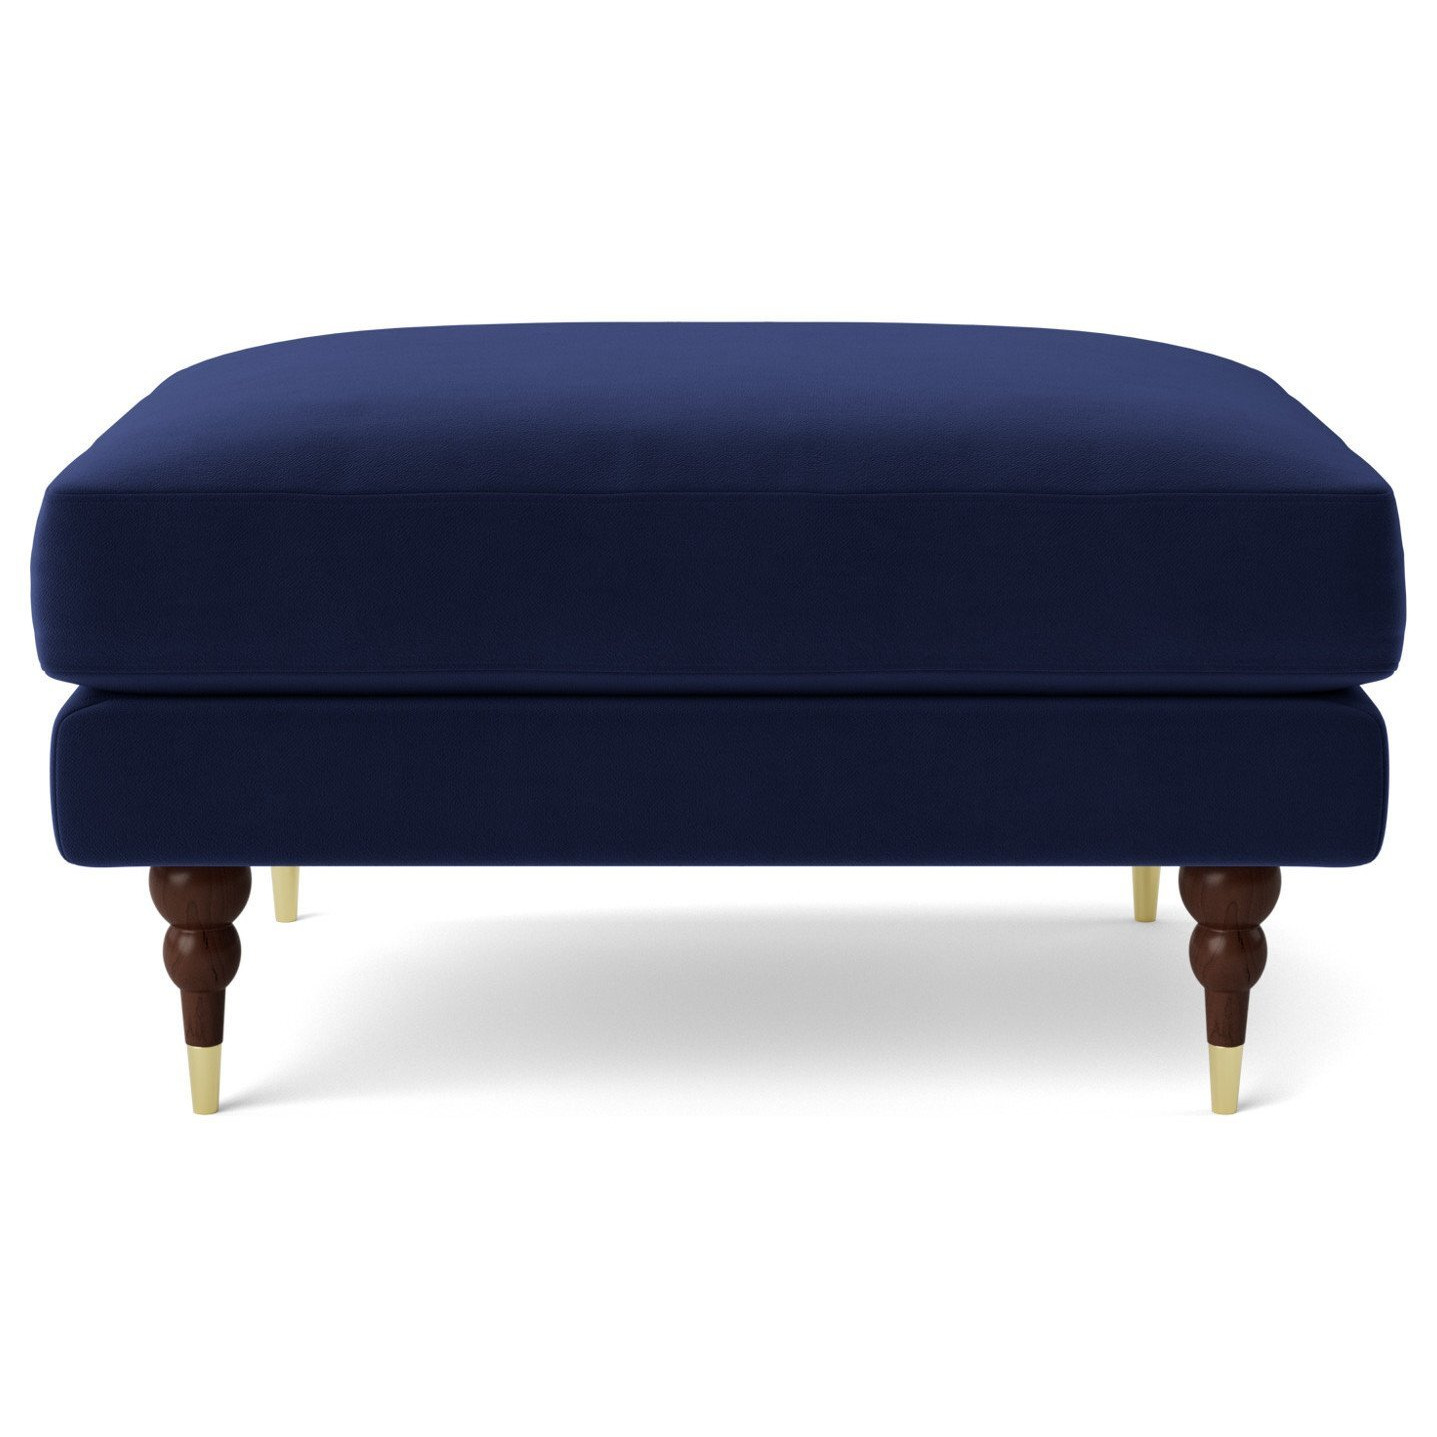 Swoon Charlbury Velvet Ottoman Footstool - Ink Blue - image 1